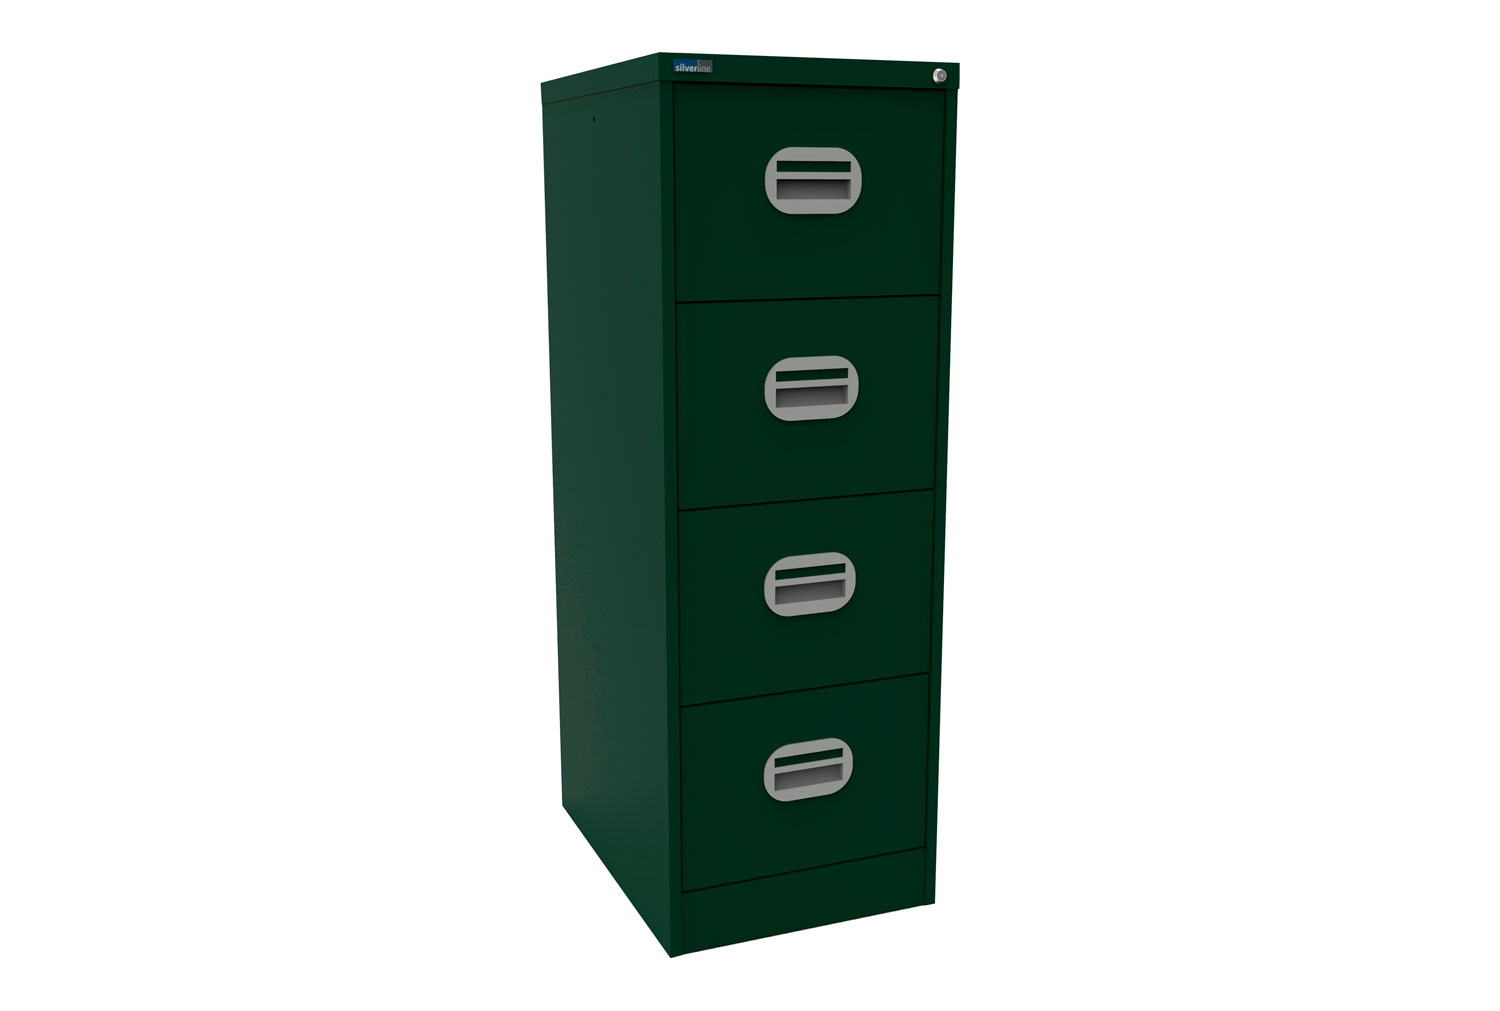 Silverline Kontrax 4 Drawer Filing Cabinet, 4 Drawer - 46wx62dx132h (cm), Green